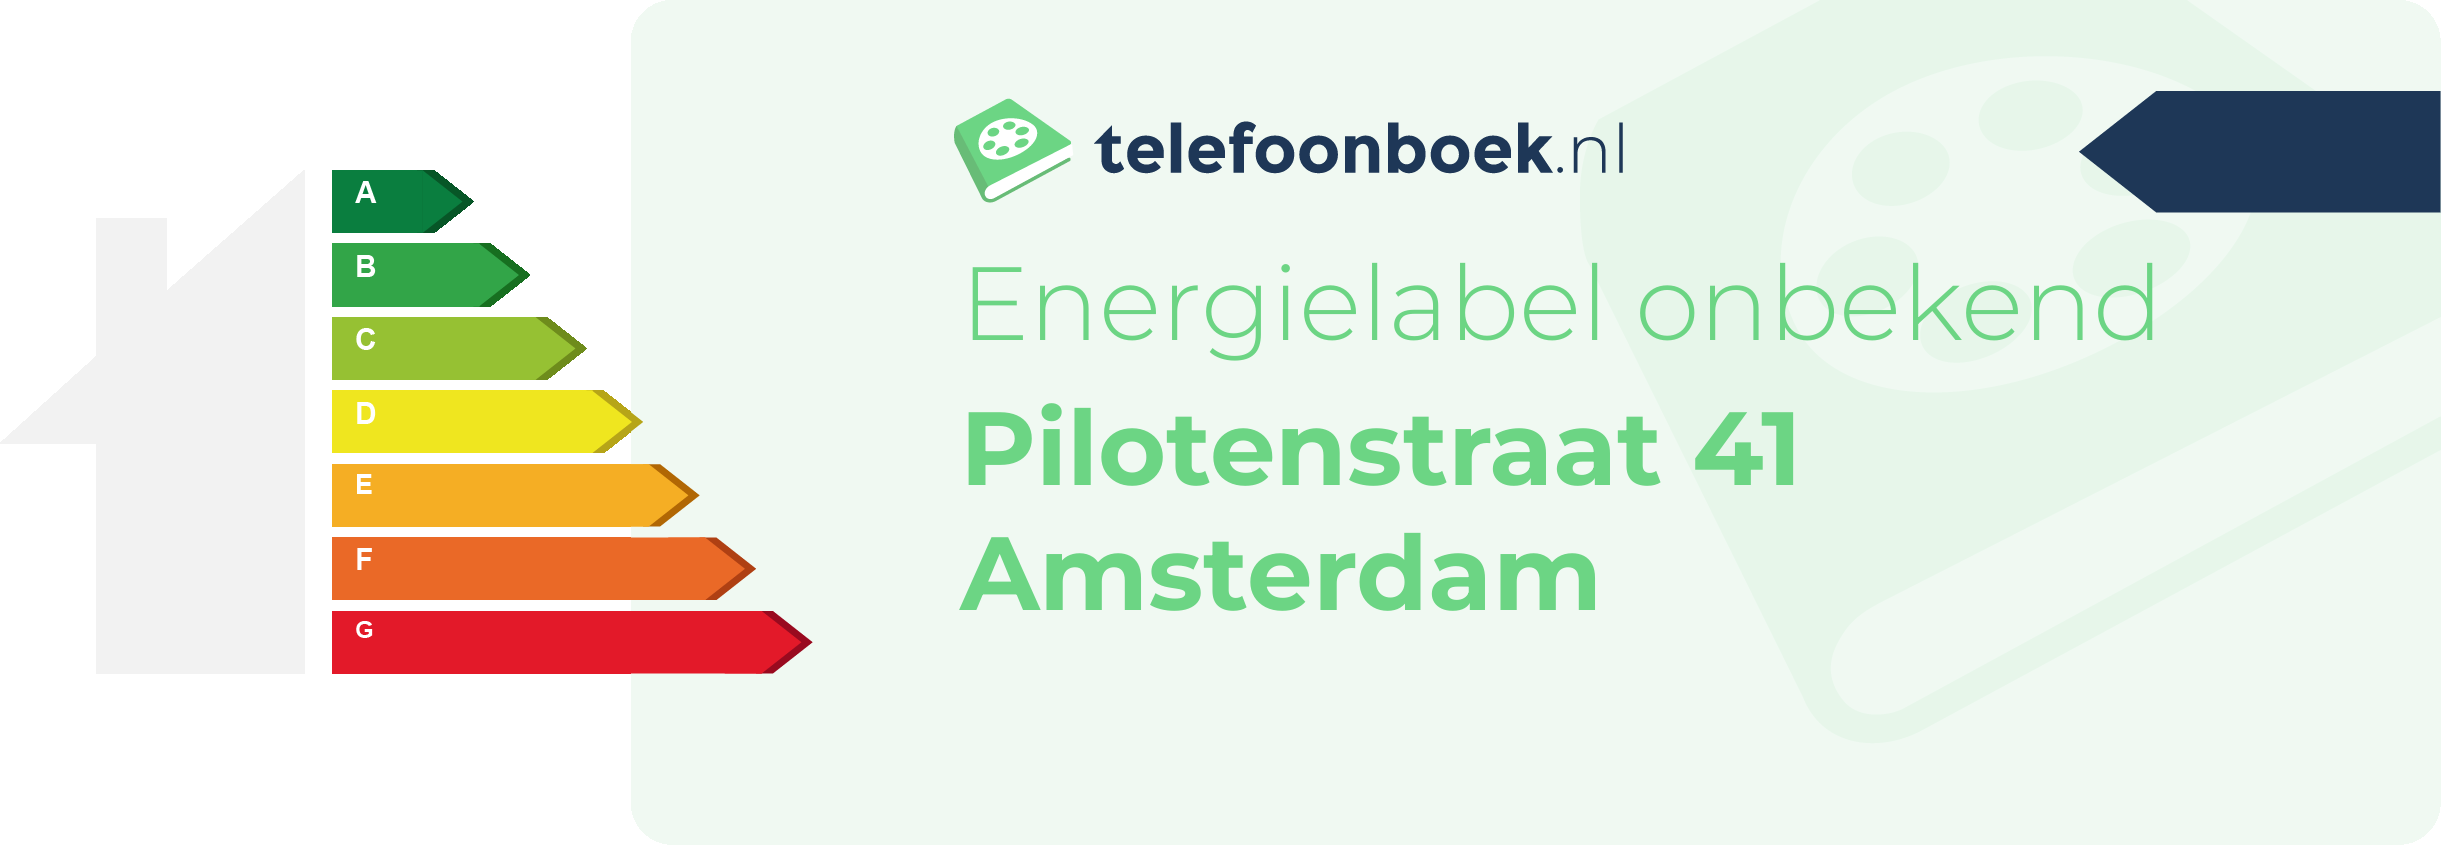 Energielabel Pilotenstraat 41 Amsterdam